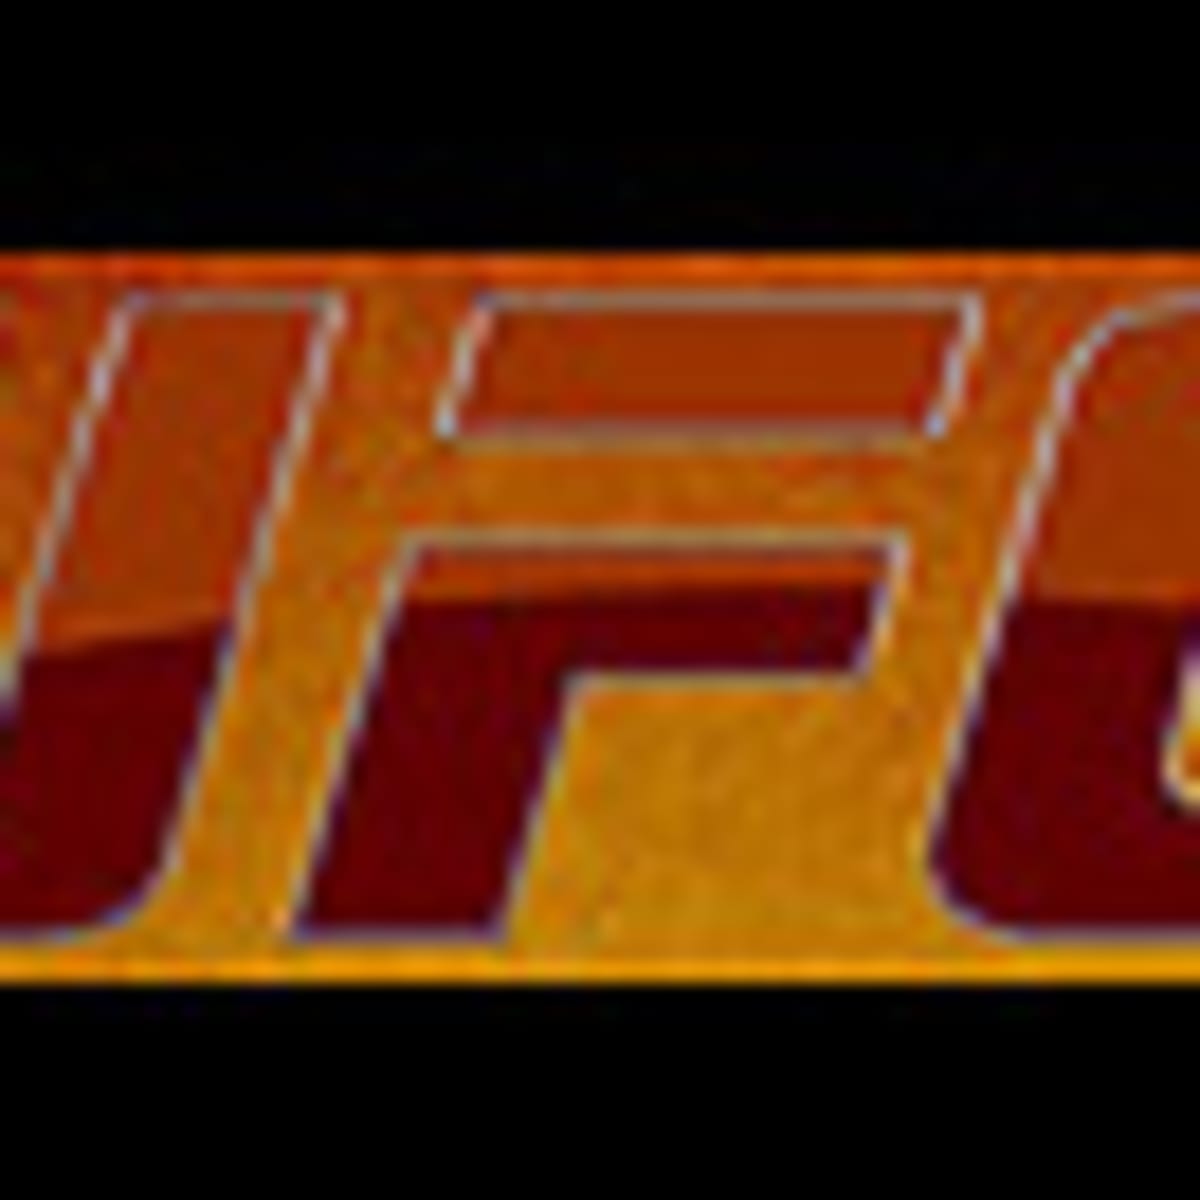 ufc logo drawings